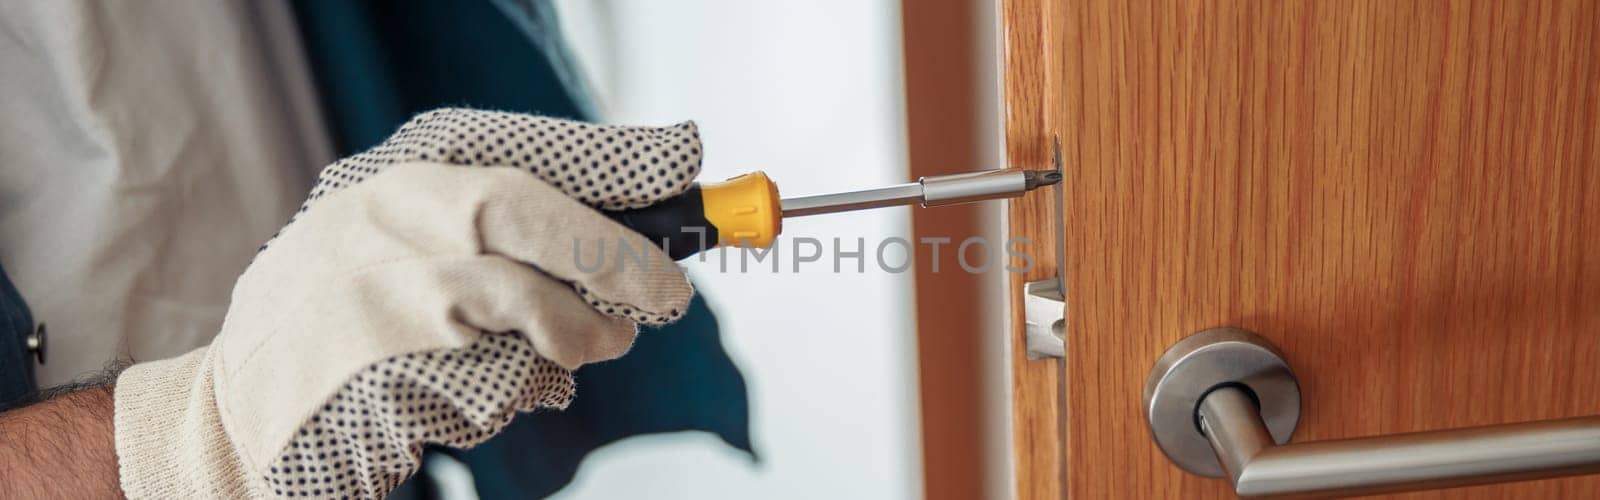 Locksmith workman in uniform installing door knob. Professional repair service. Maintenance Concept